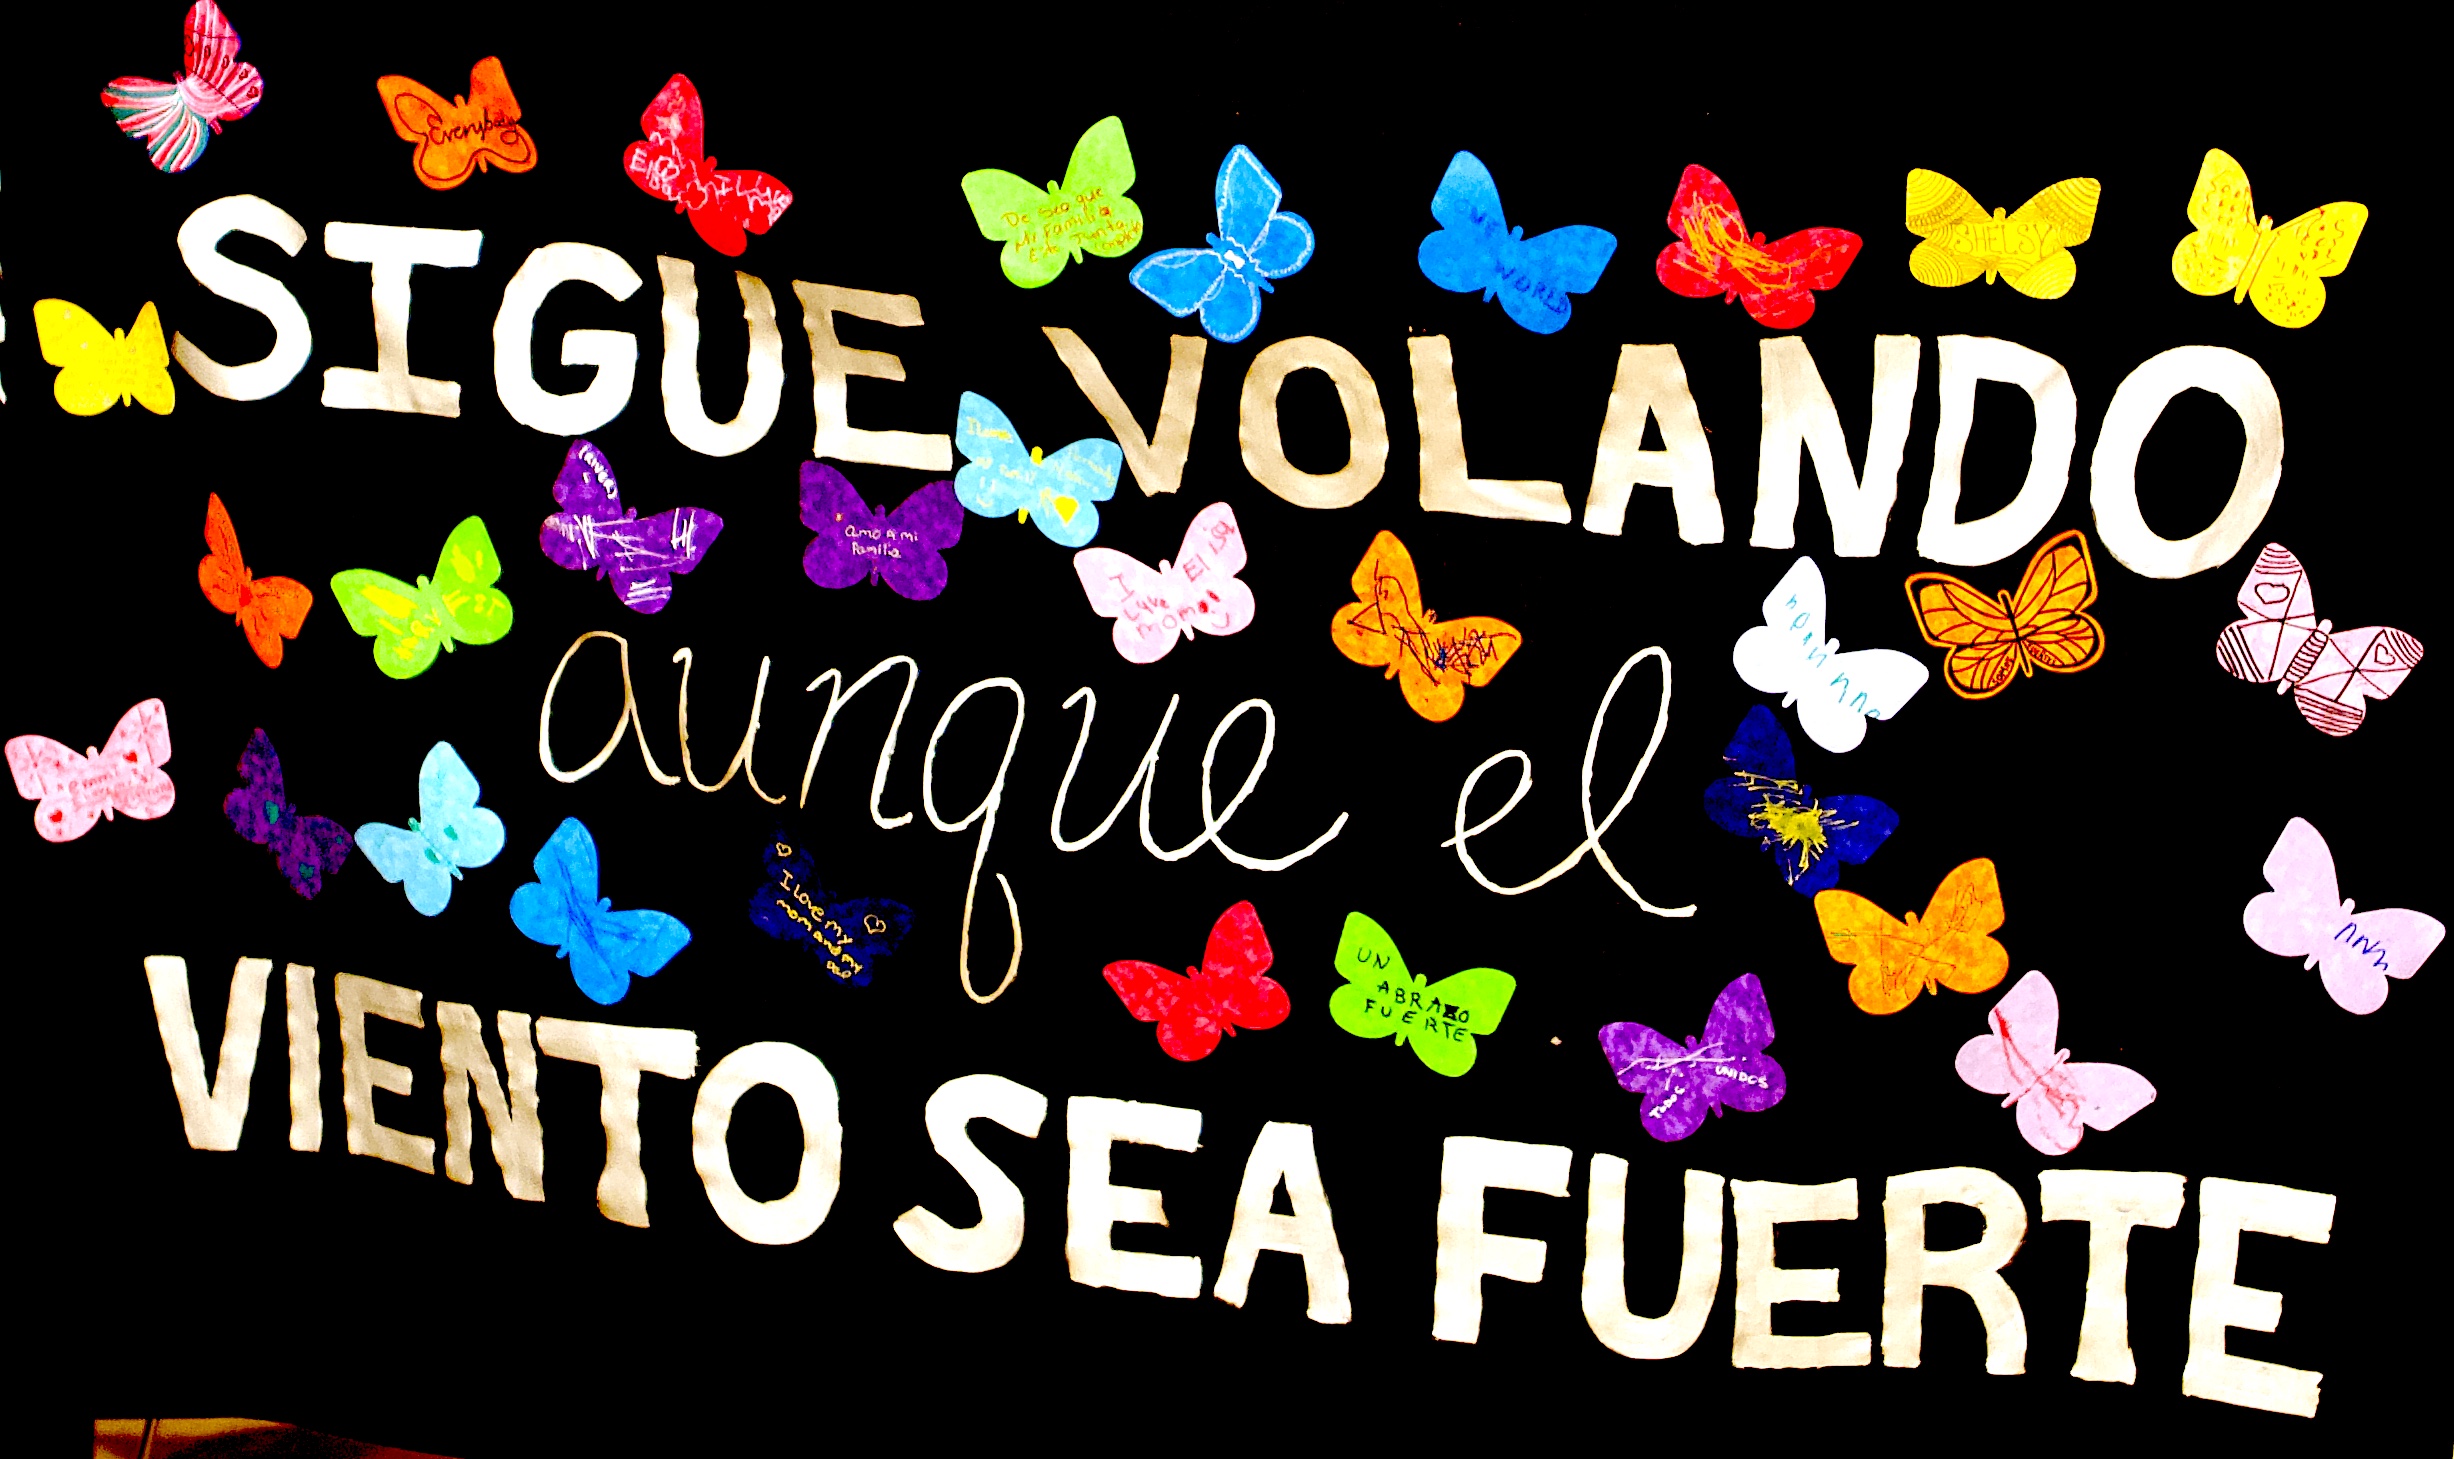 Image of lots of butterflies of different colors. Text reads "Sigue volando aunque el viento sea fuerte."